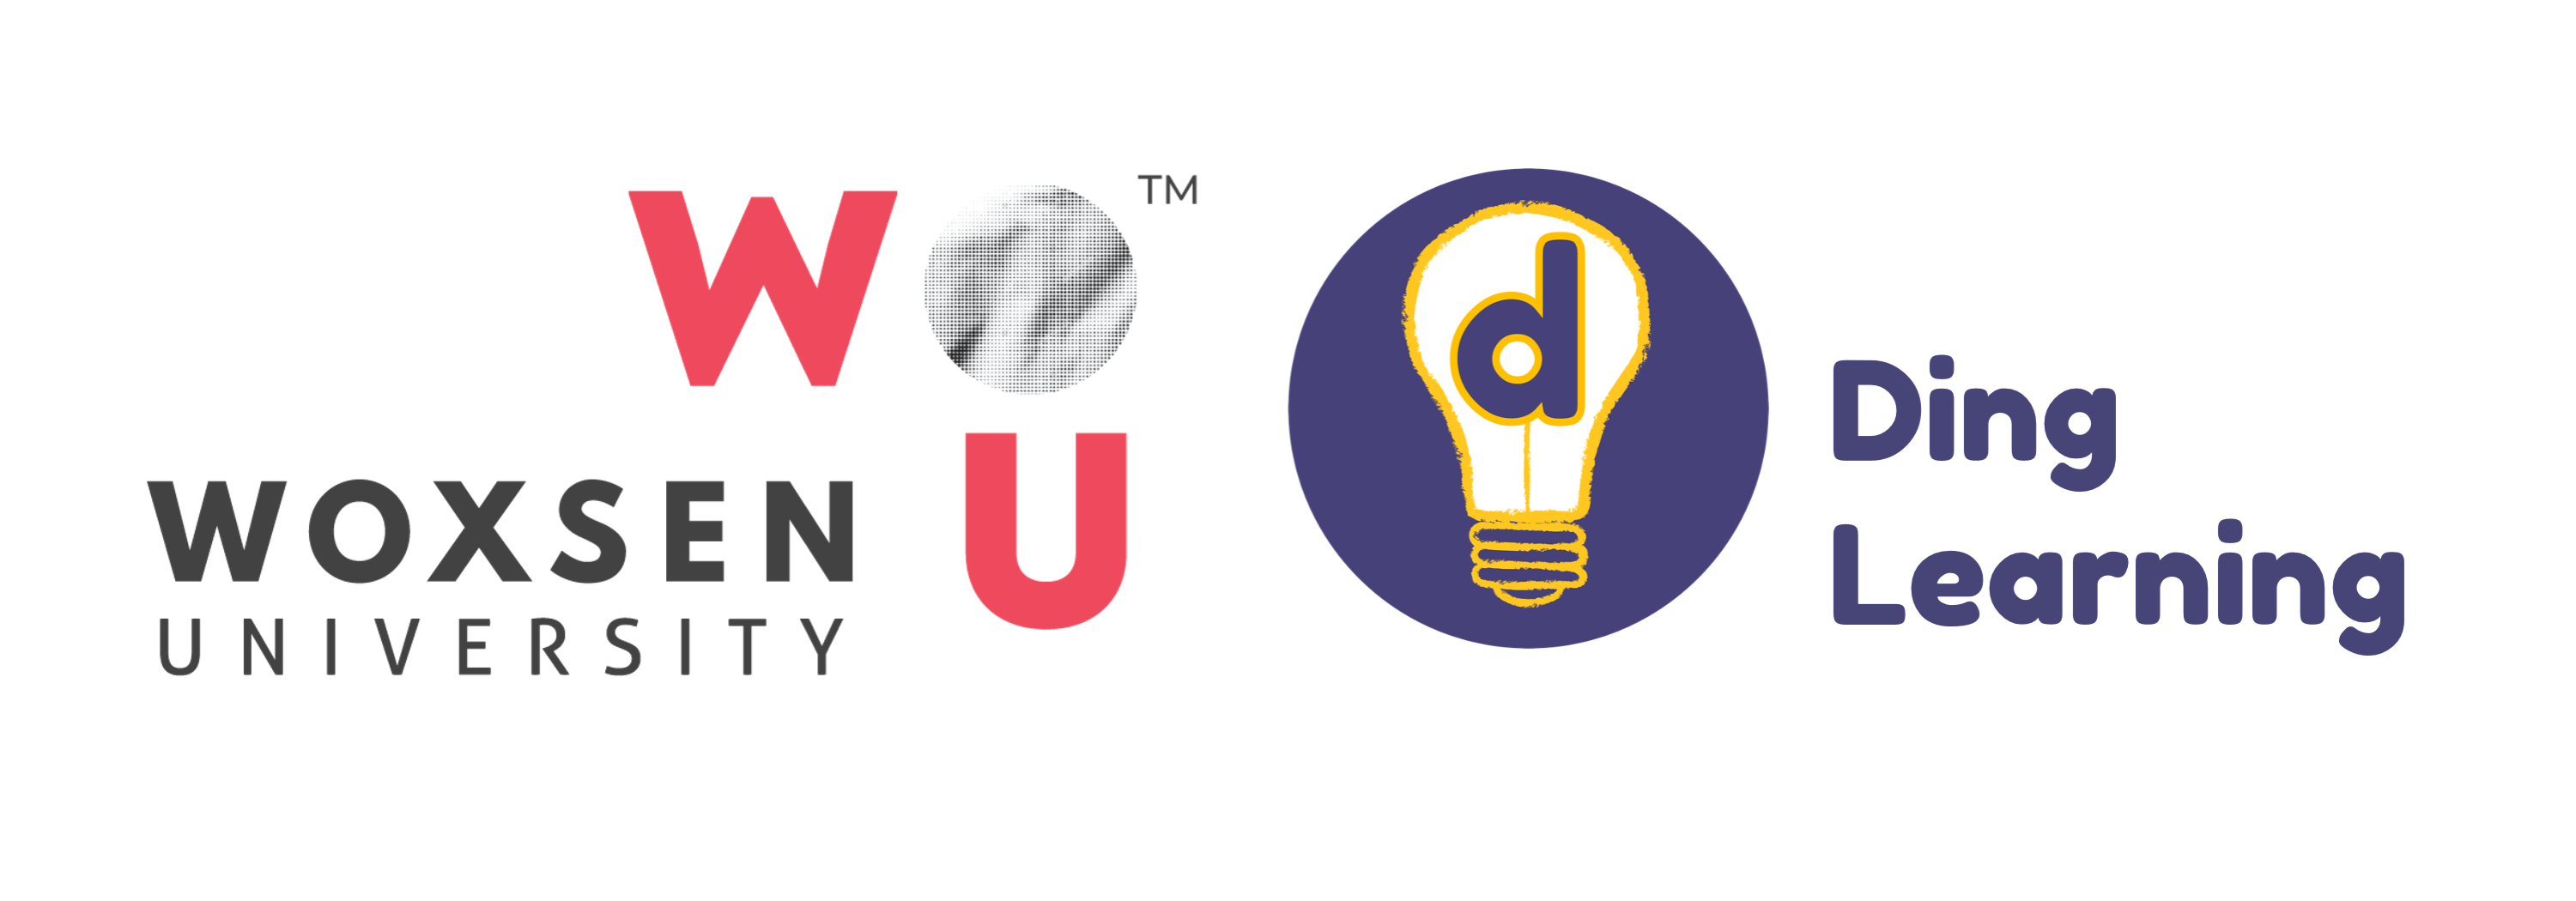 Woxsen University logo and Ding Learning Logo